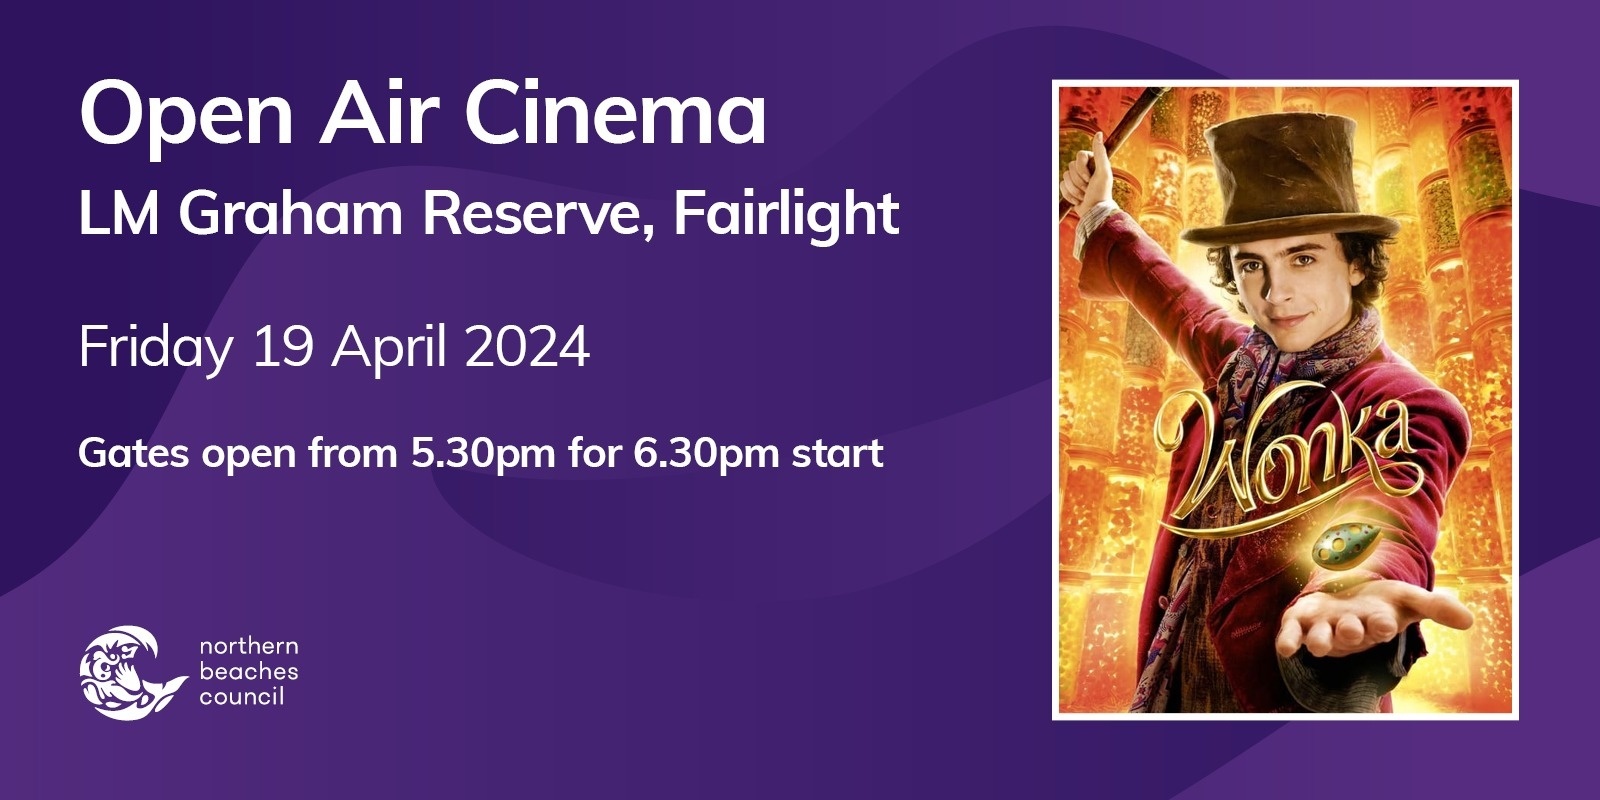 Banner image for Open Air Cinema, Fairlight - Friday 19 April 2024 - Wonka